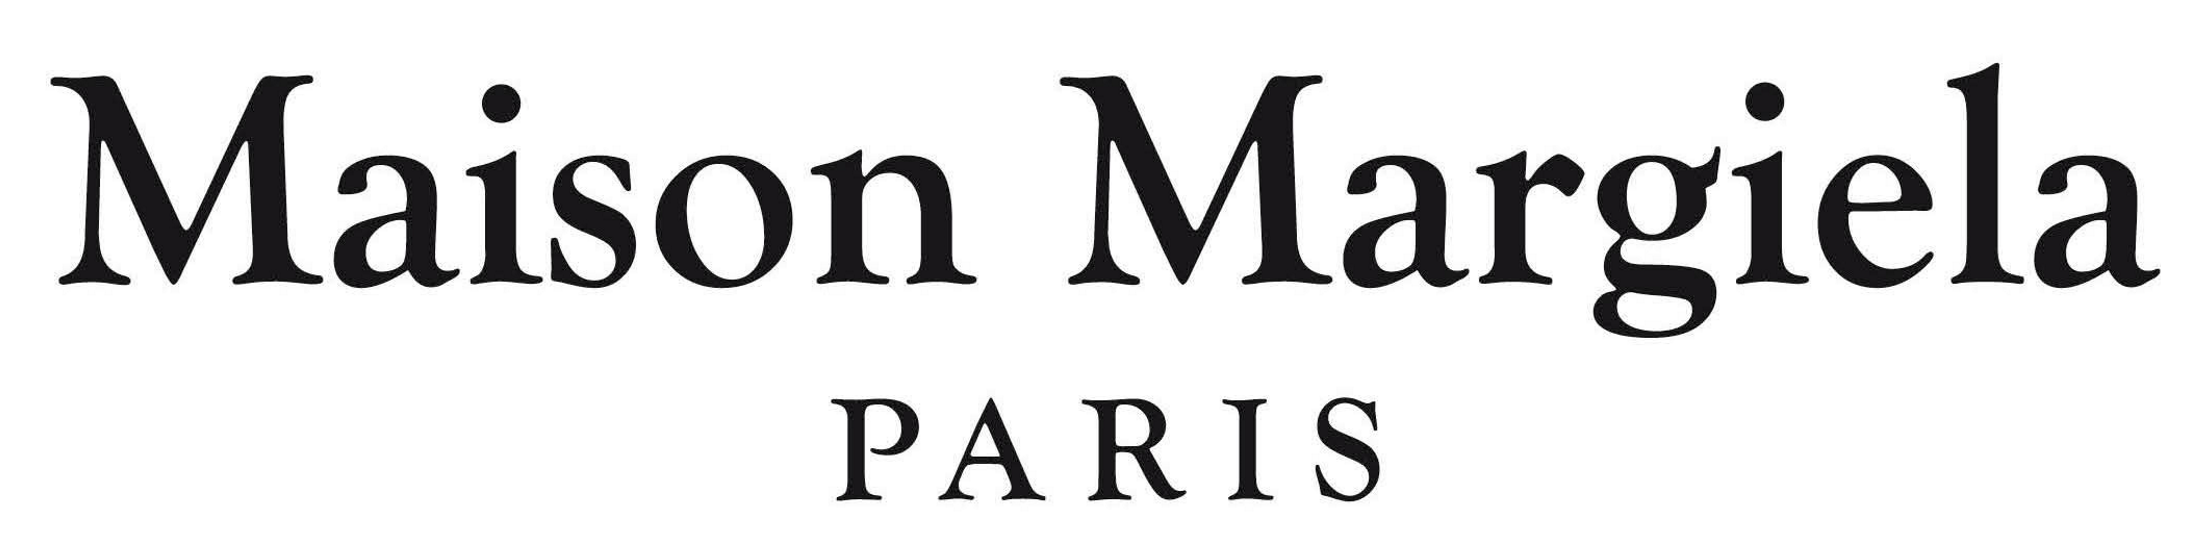 Maison Margiela Logo Png - KibrisPDR